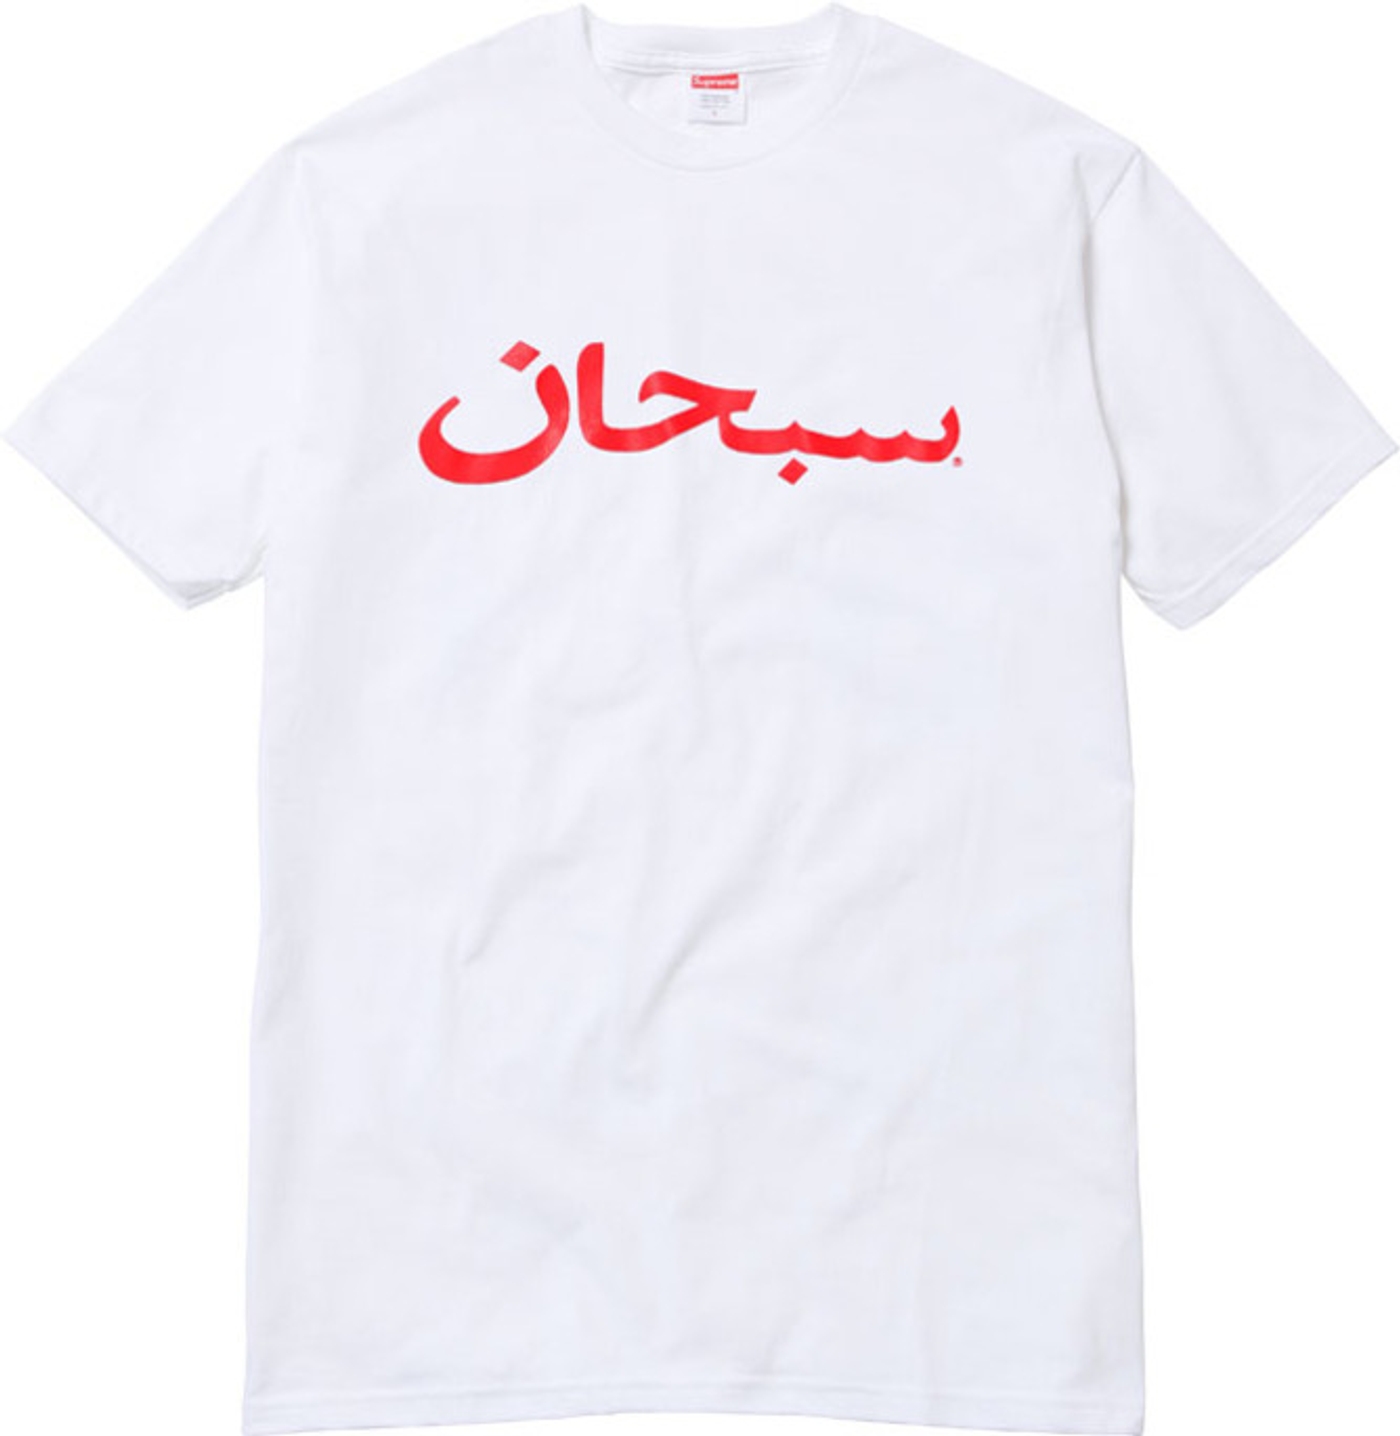 Arabic Logo Tee
All cotton classic Supreme t-shirt (6/9)